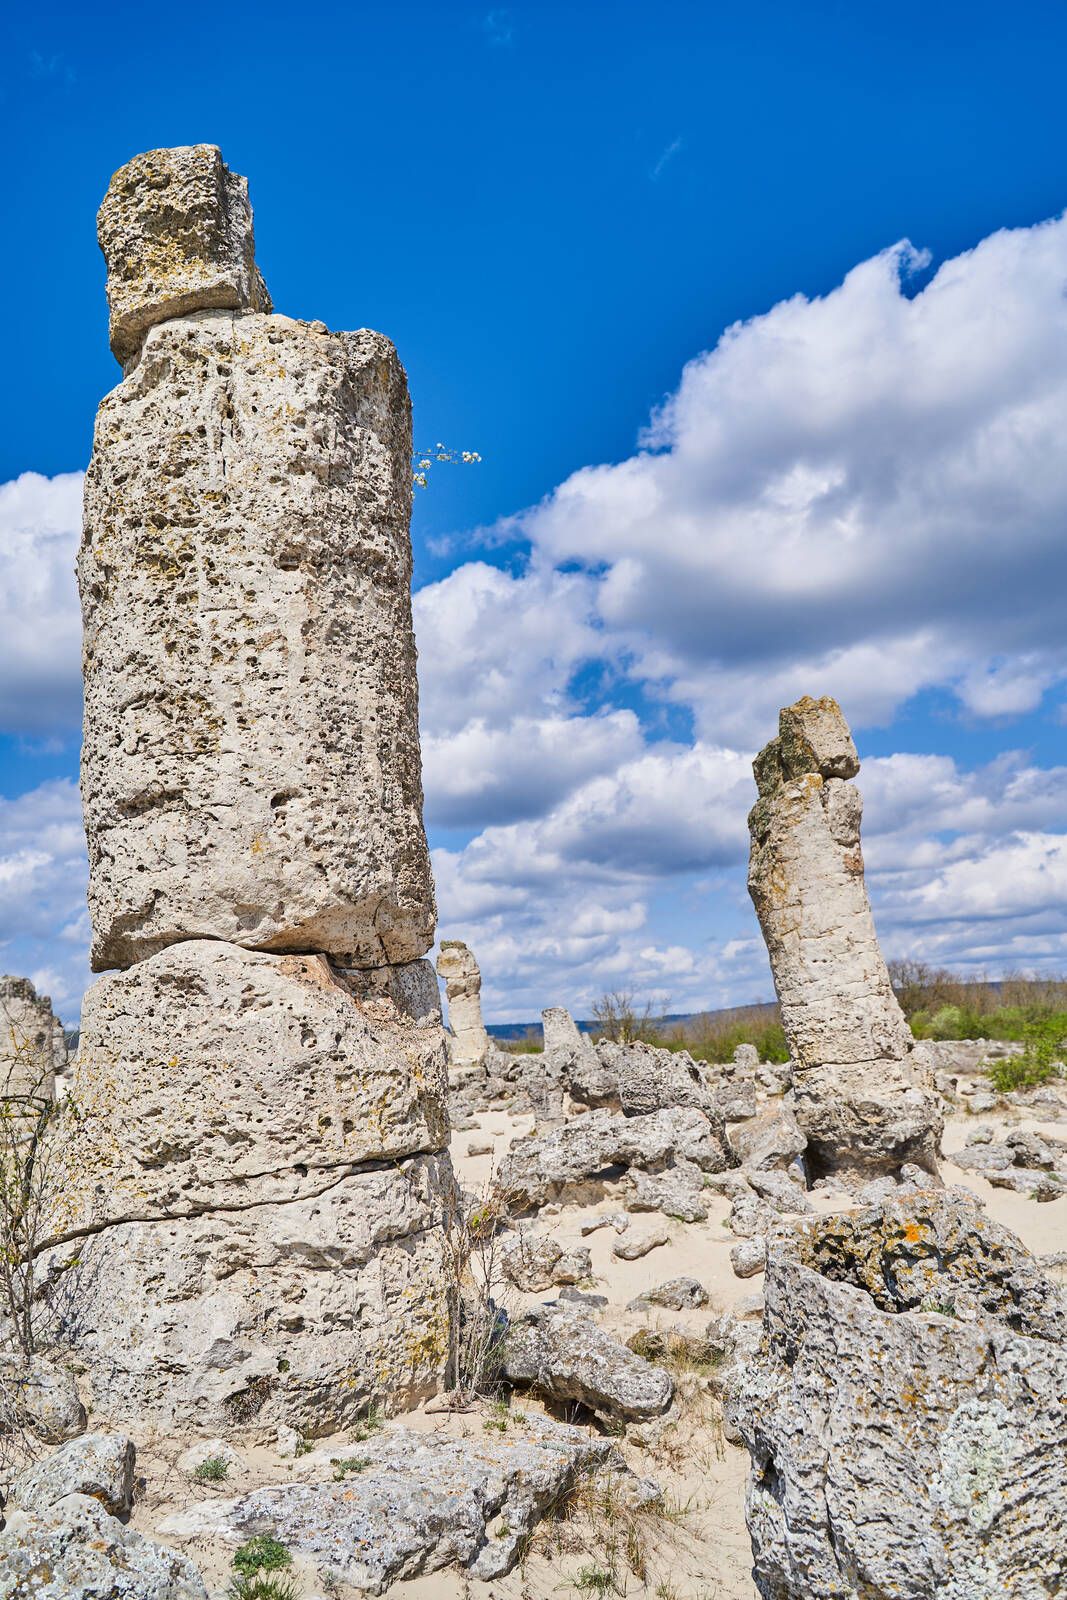 Image of Pobiti Kamani (The Stone forest) by Rostikslav Nepomnyaschiy